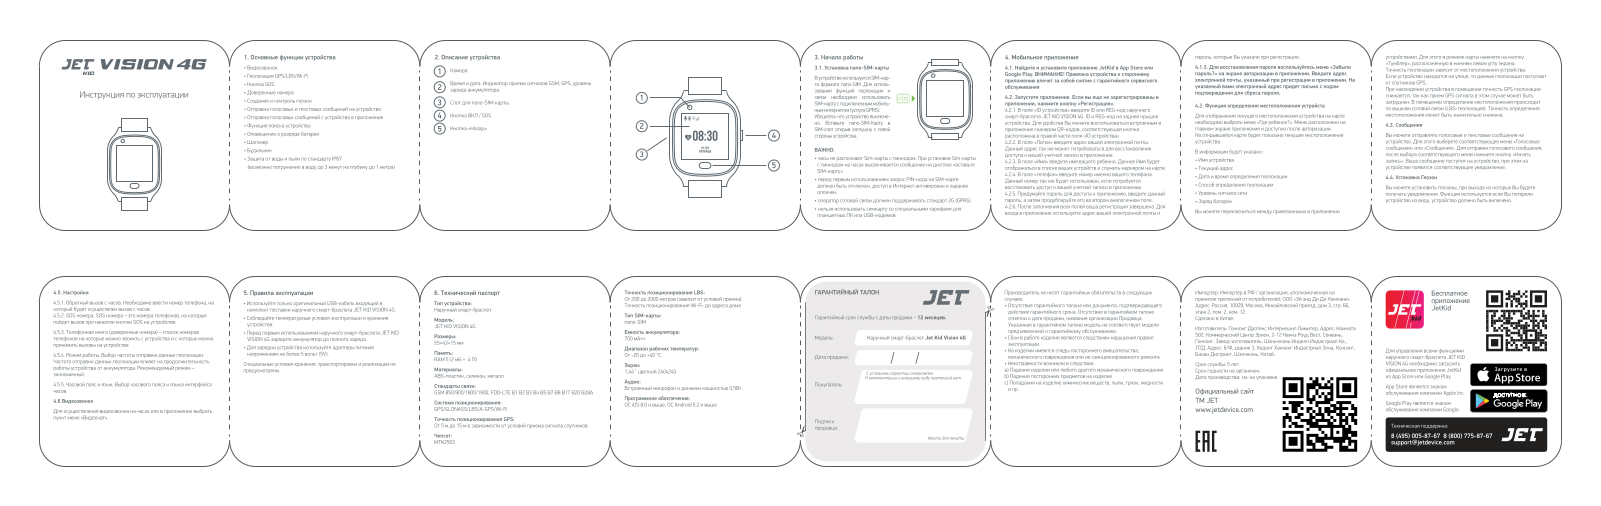 JET Kid Vision 4G User Manual